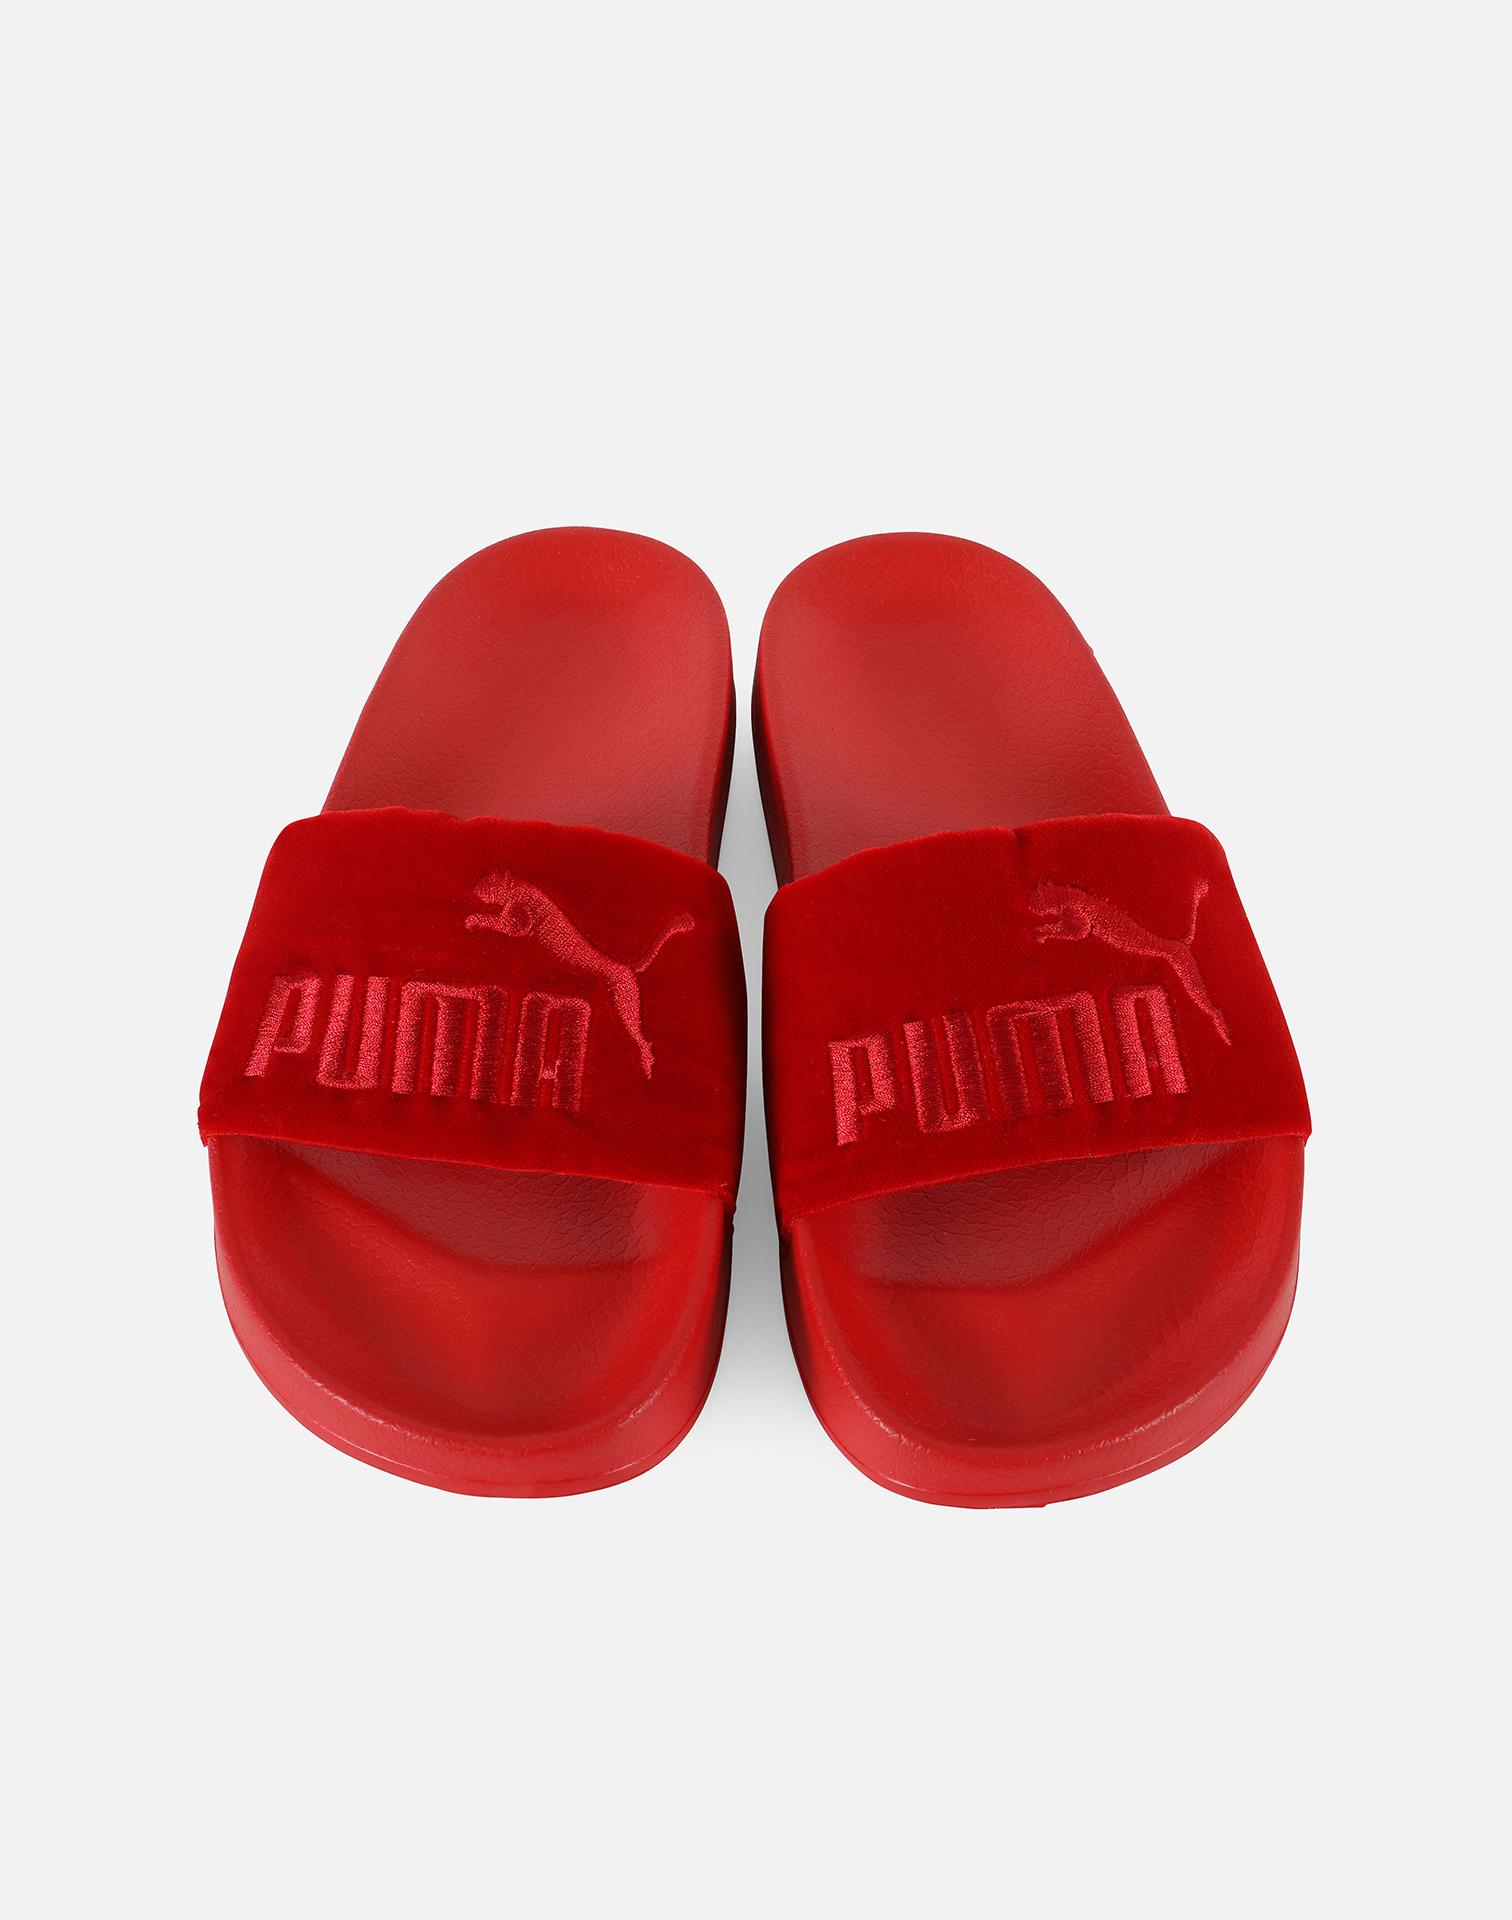 puma red slides